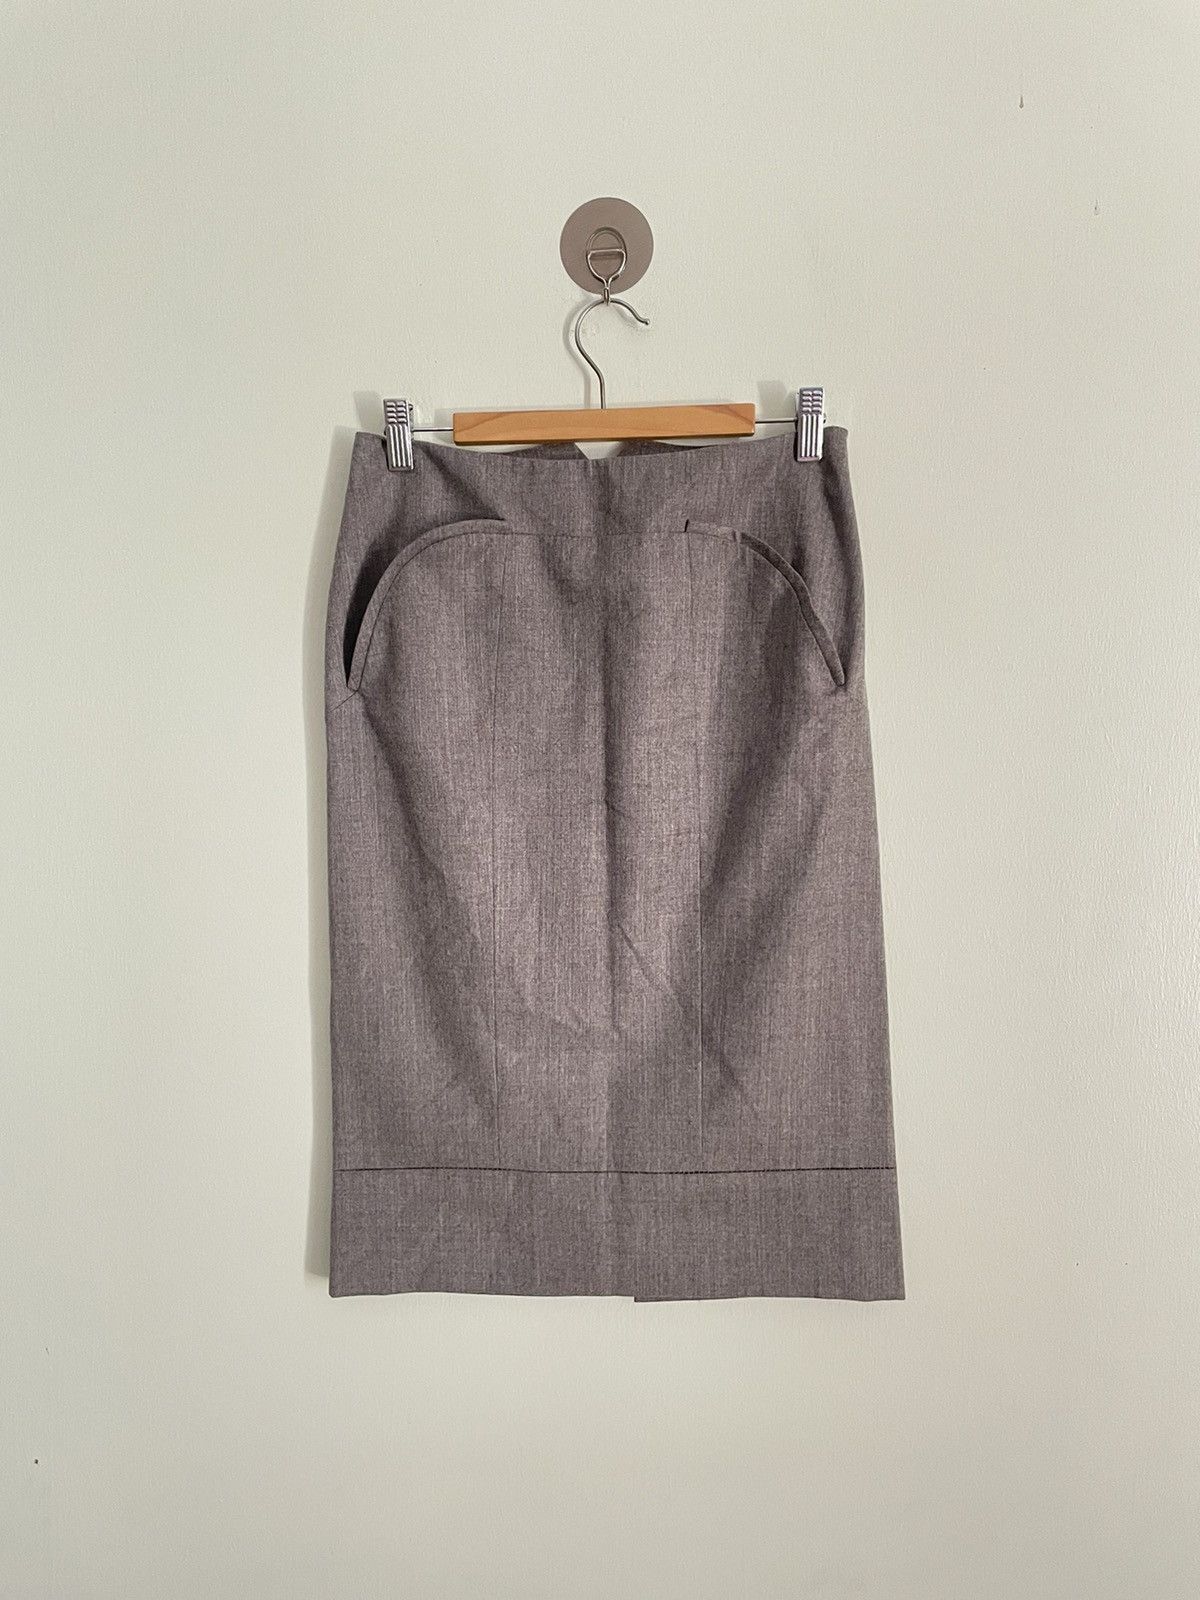 Stella McCartney STELLA MCCARTNEY asymmetrical gray wool skirt XS 